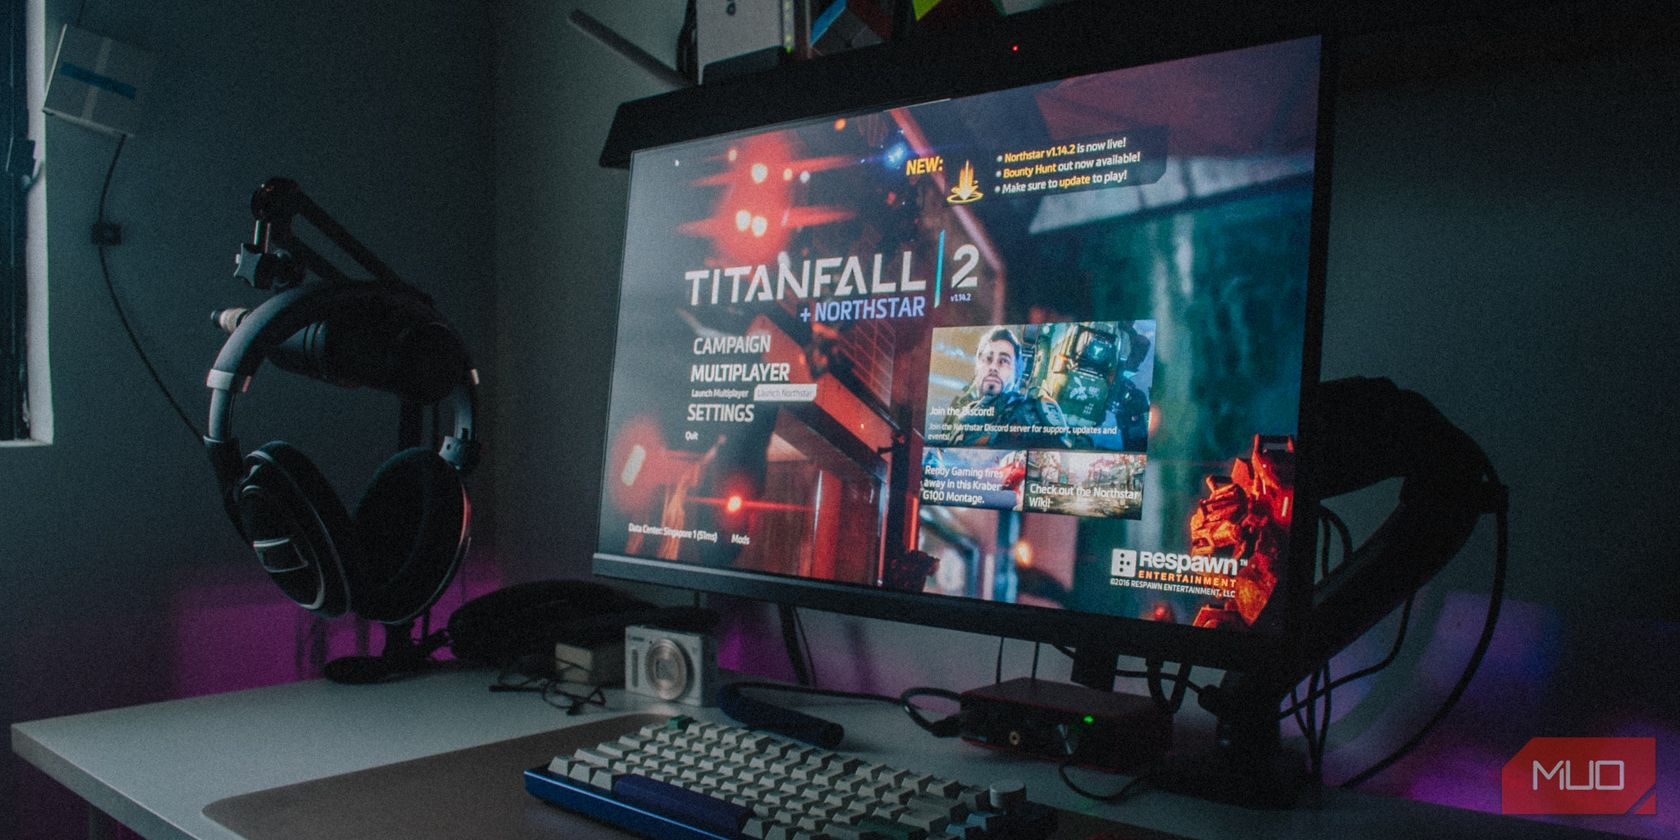 Titanfall 2's 4-player co-op horde mode is now live - MSPoweruser